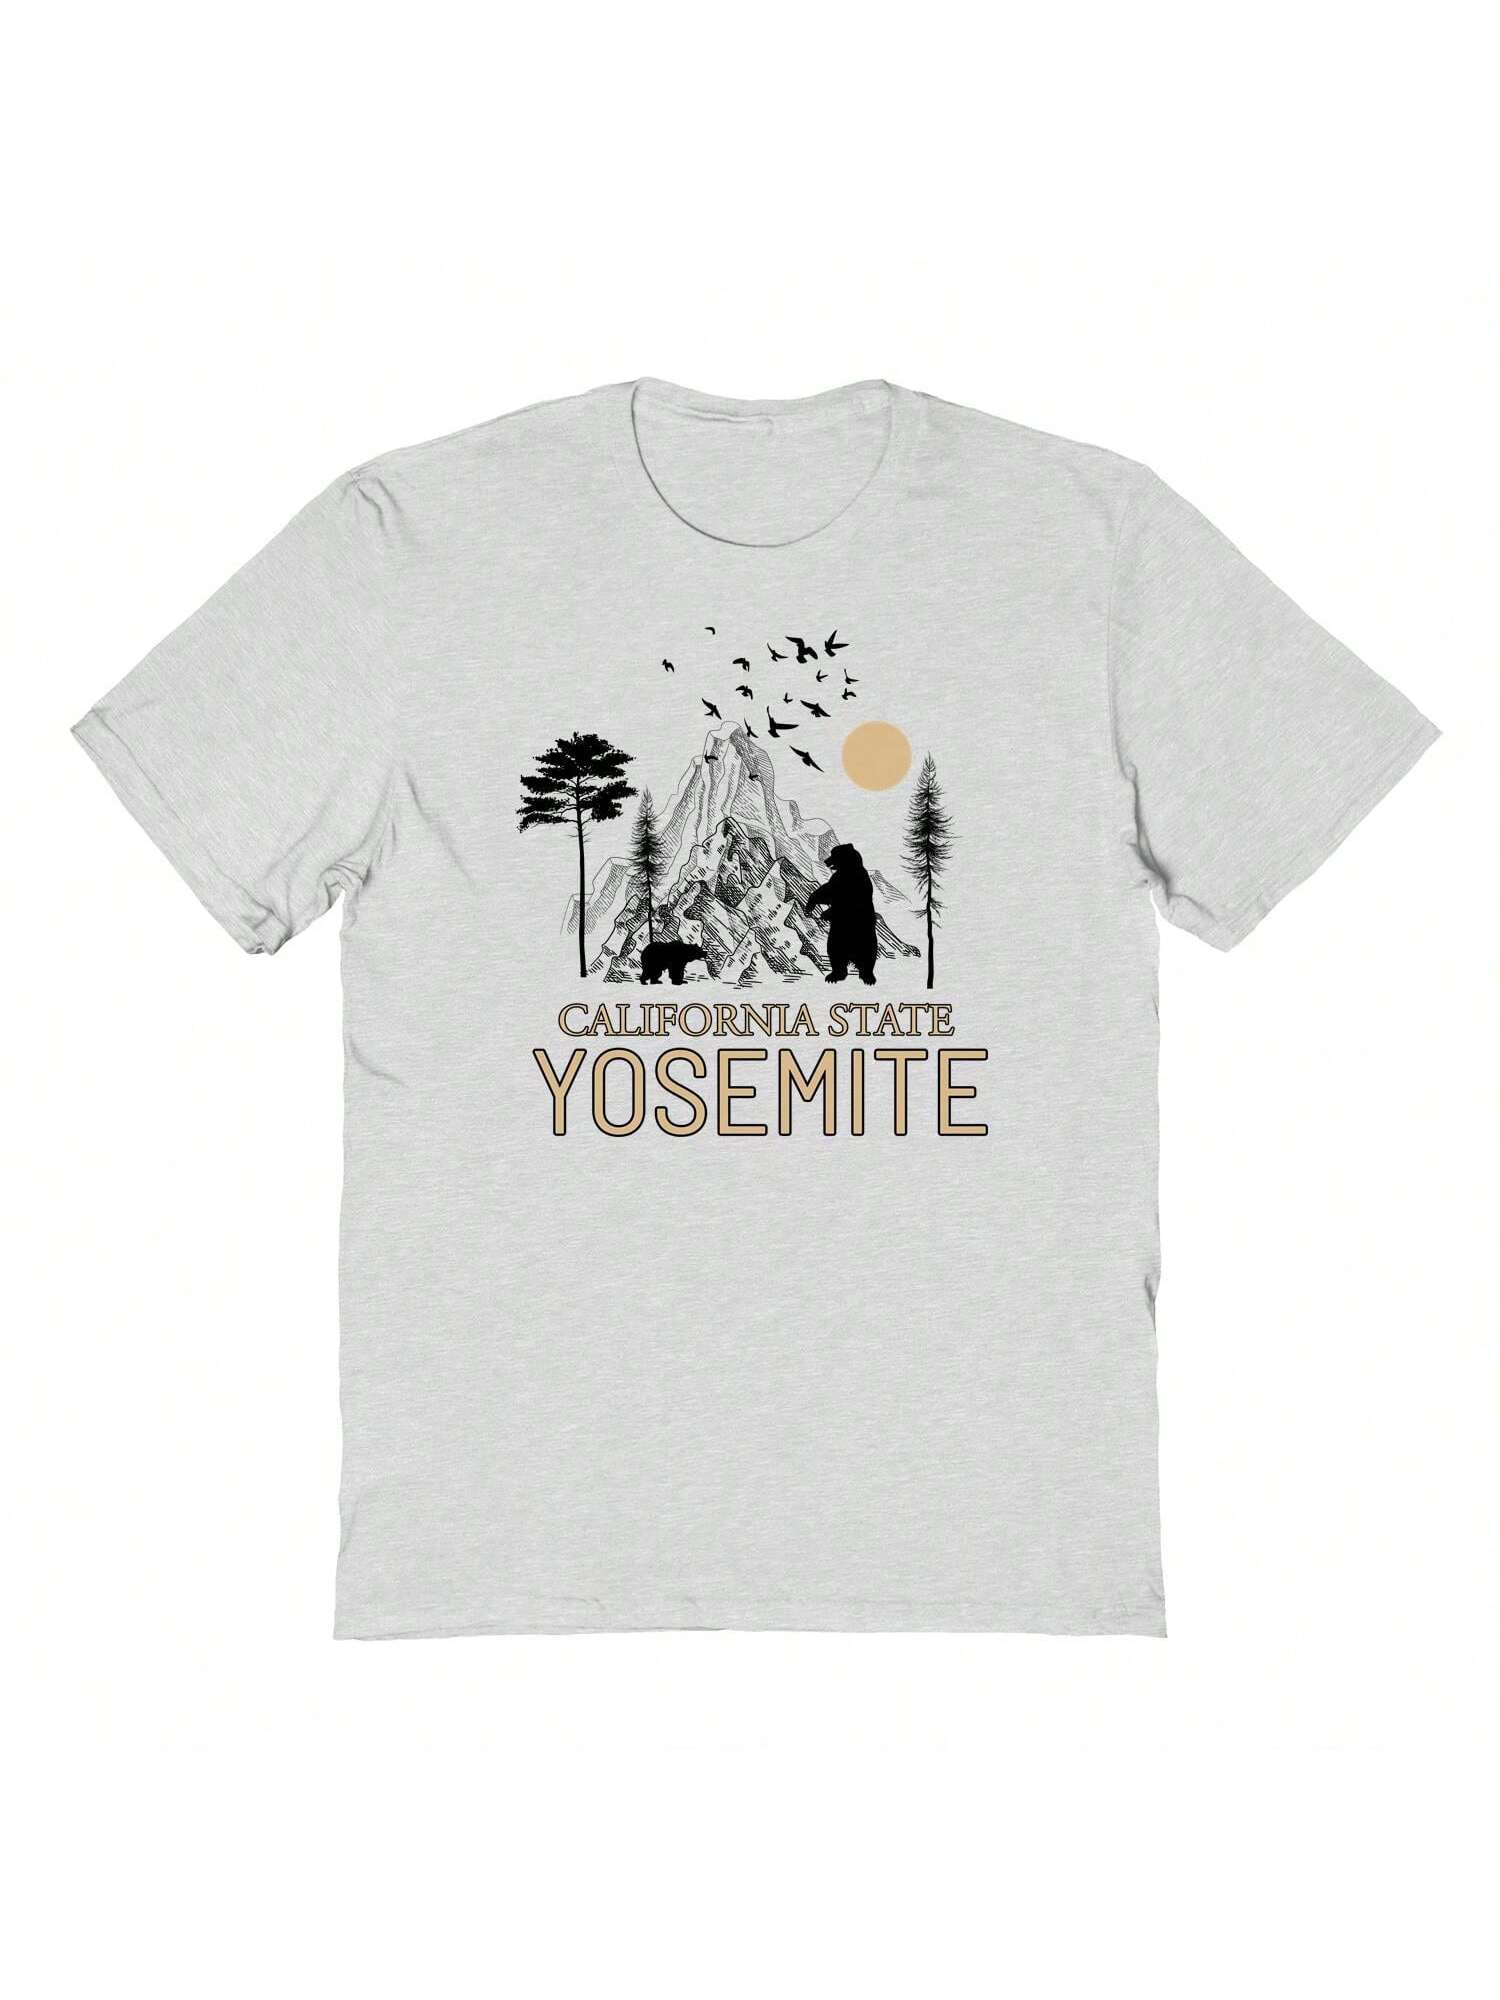 Мужская хлопковая футболка с короткими рукавами Country Parks California State Yose Mite Graphic Sand, светло-серый